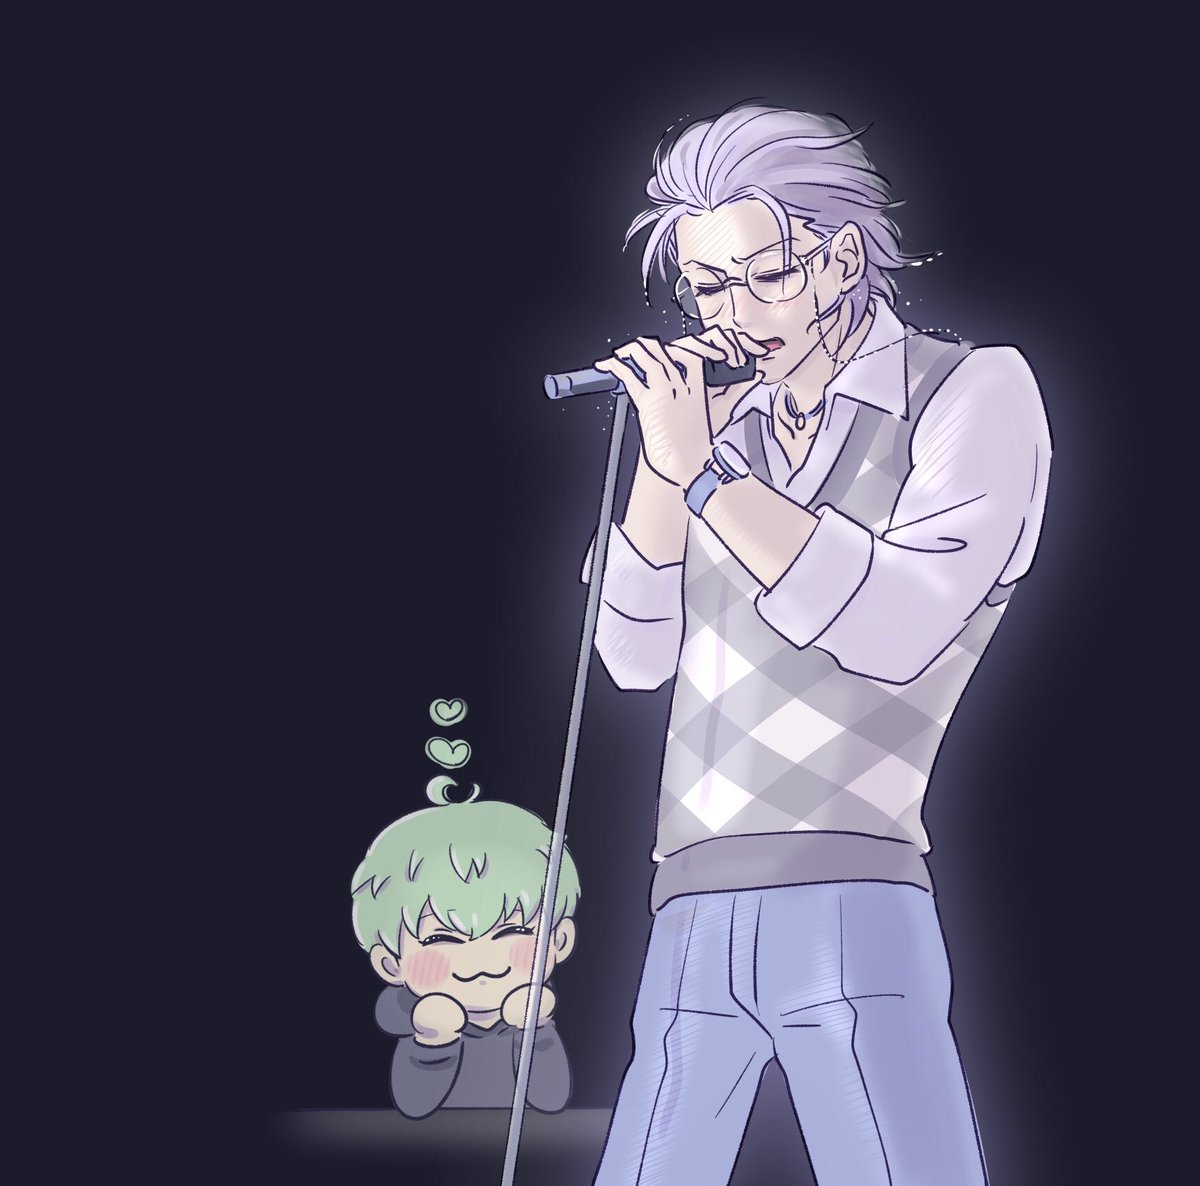 multiple boys 2boys microphone singing music glasses green hair  illustration images